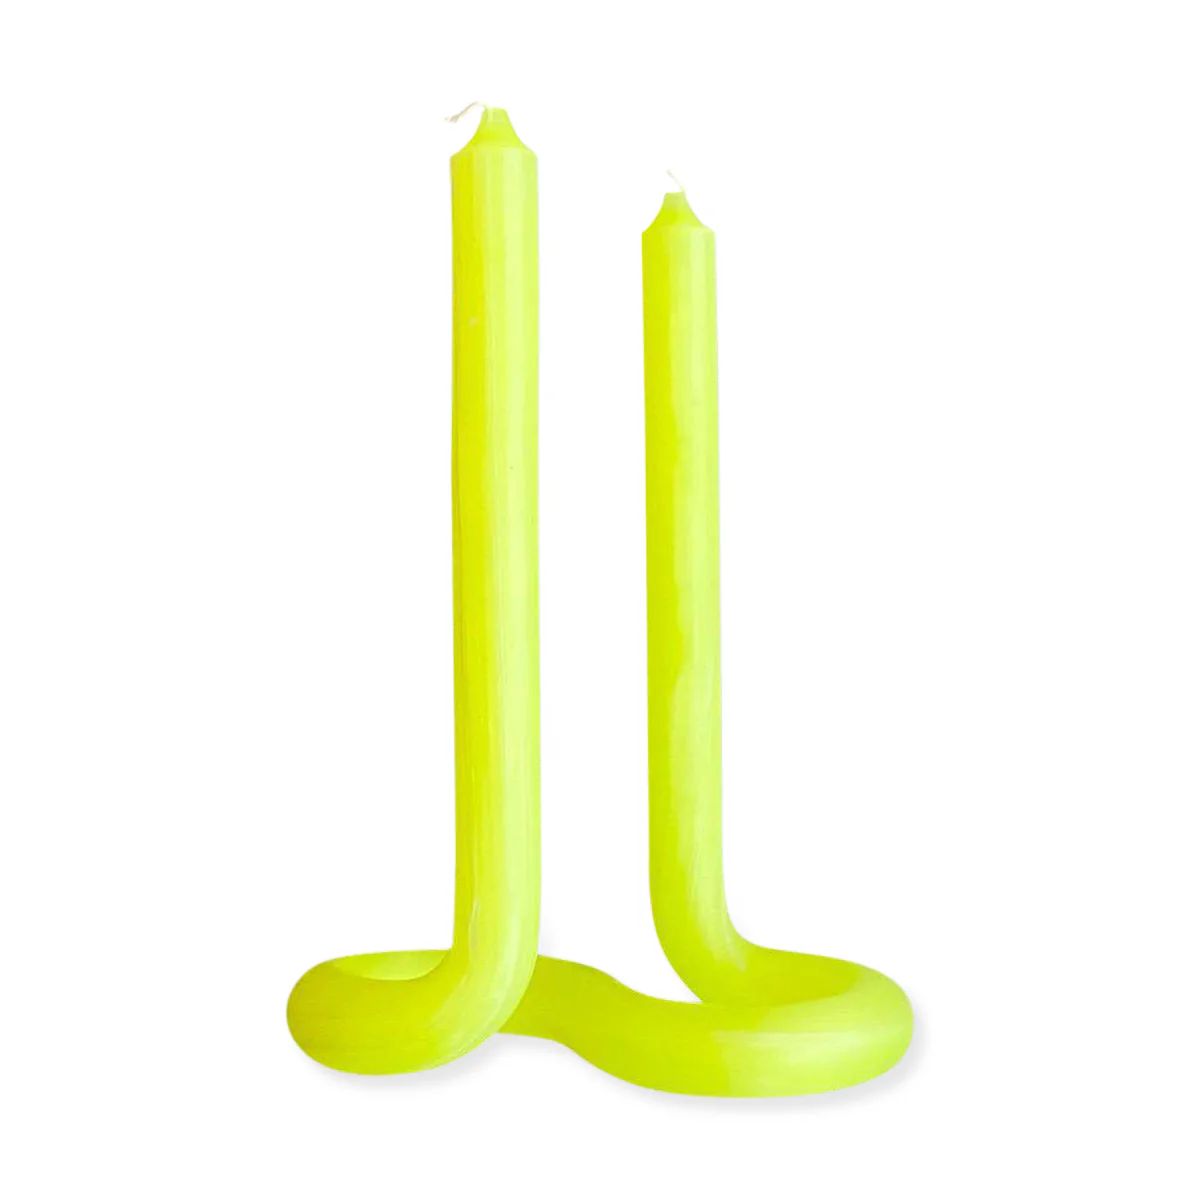 Furbish Studio - Twirl Taper Candle in Neon Lemon | Furbish Studio